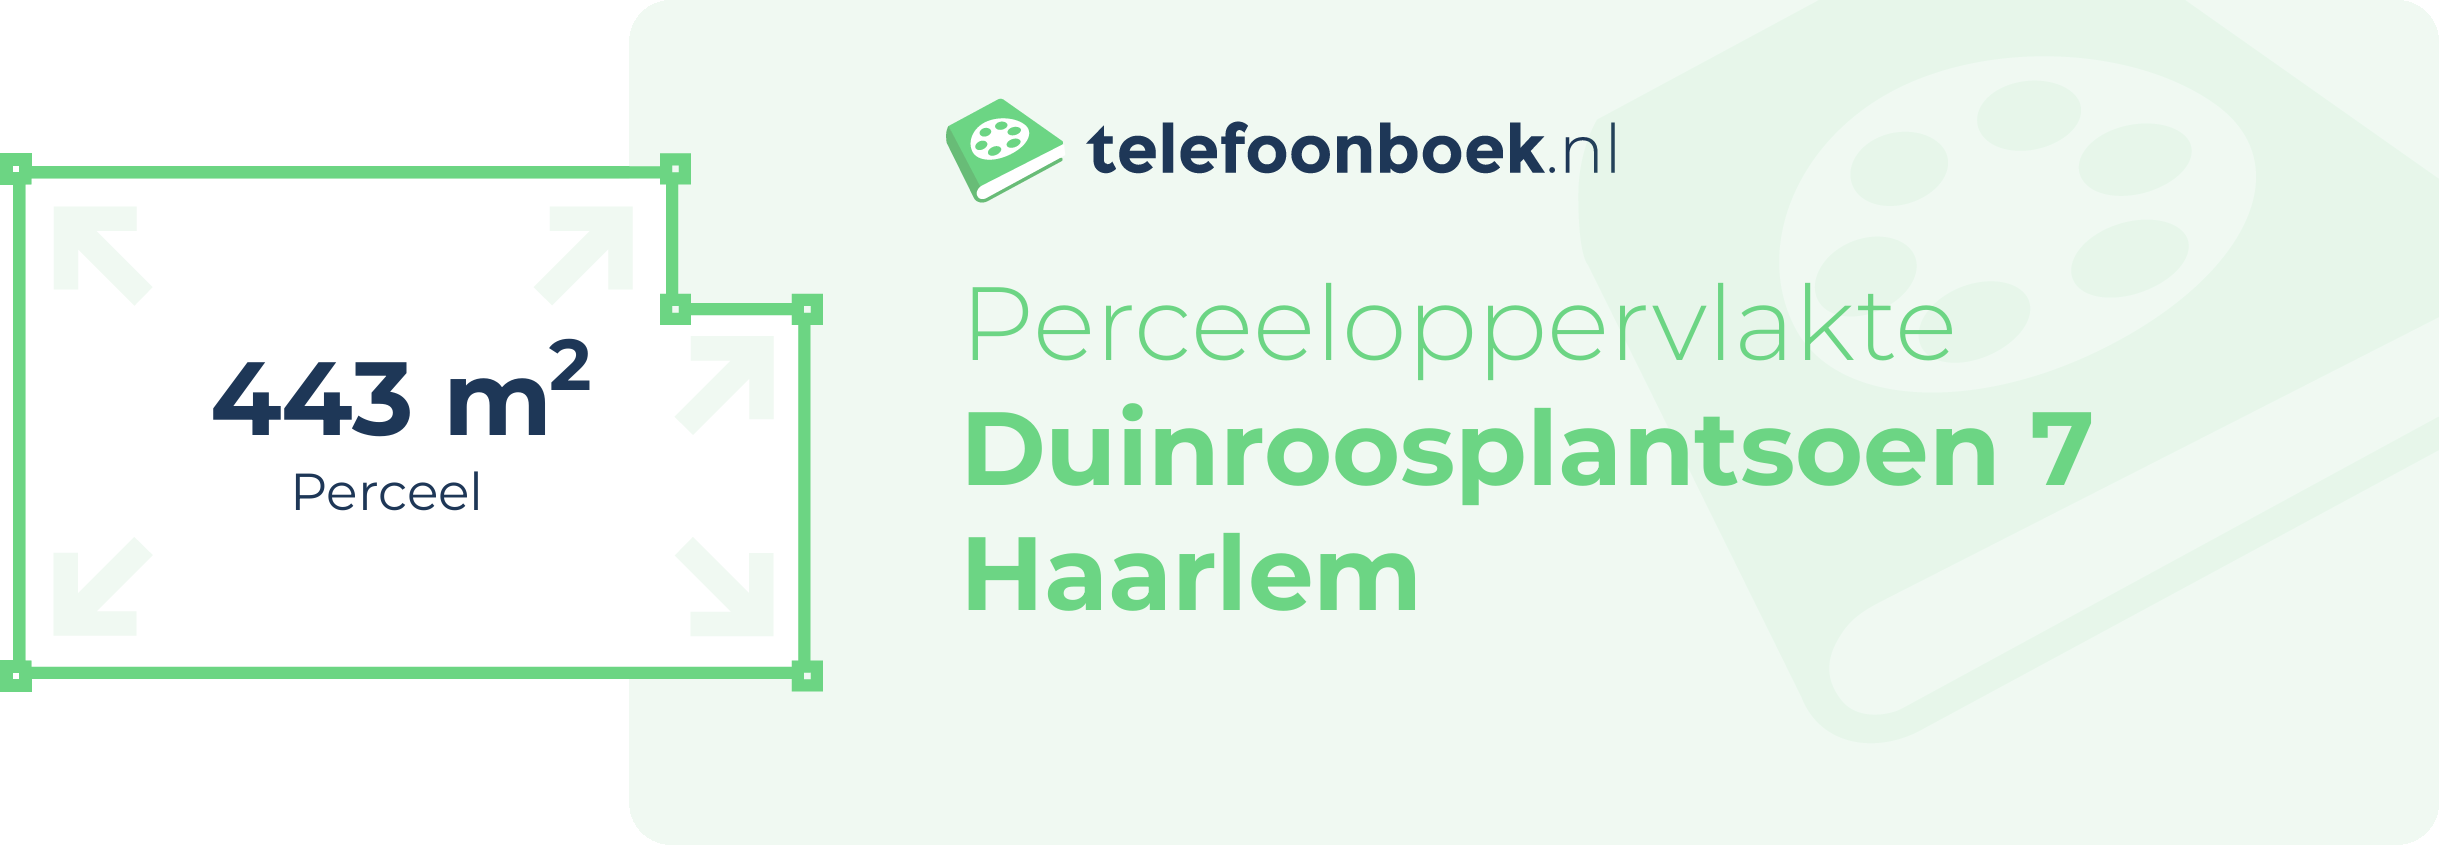 Perceeloppervlakte Duinroosplantsoen 7 Haarlem